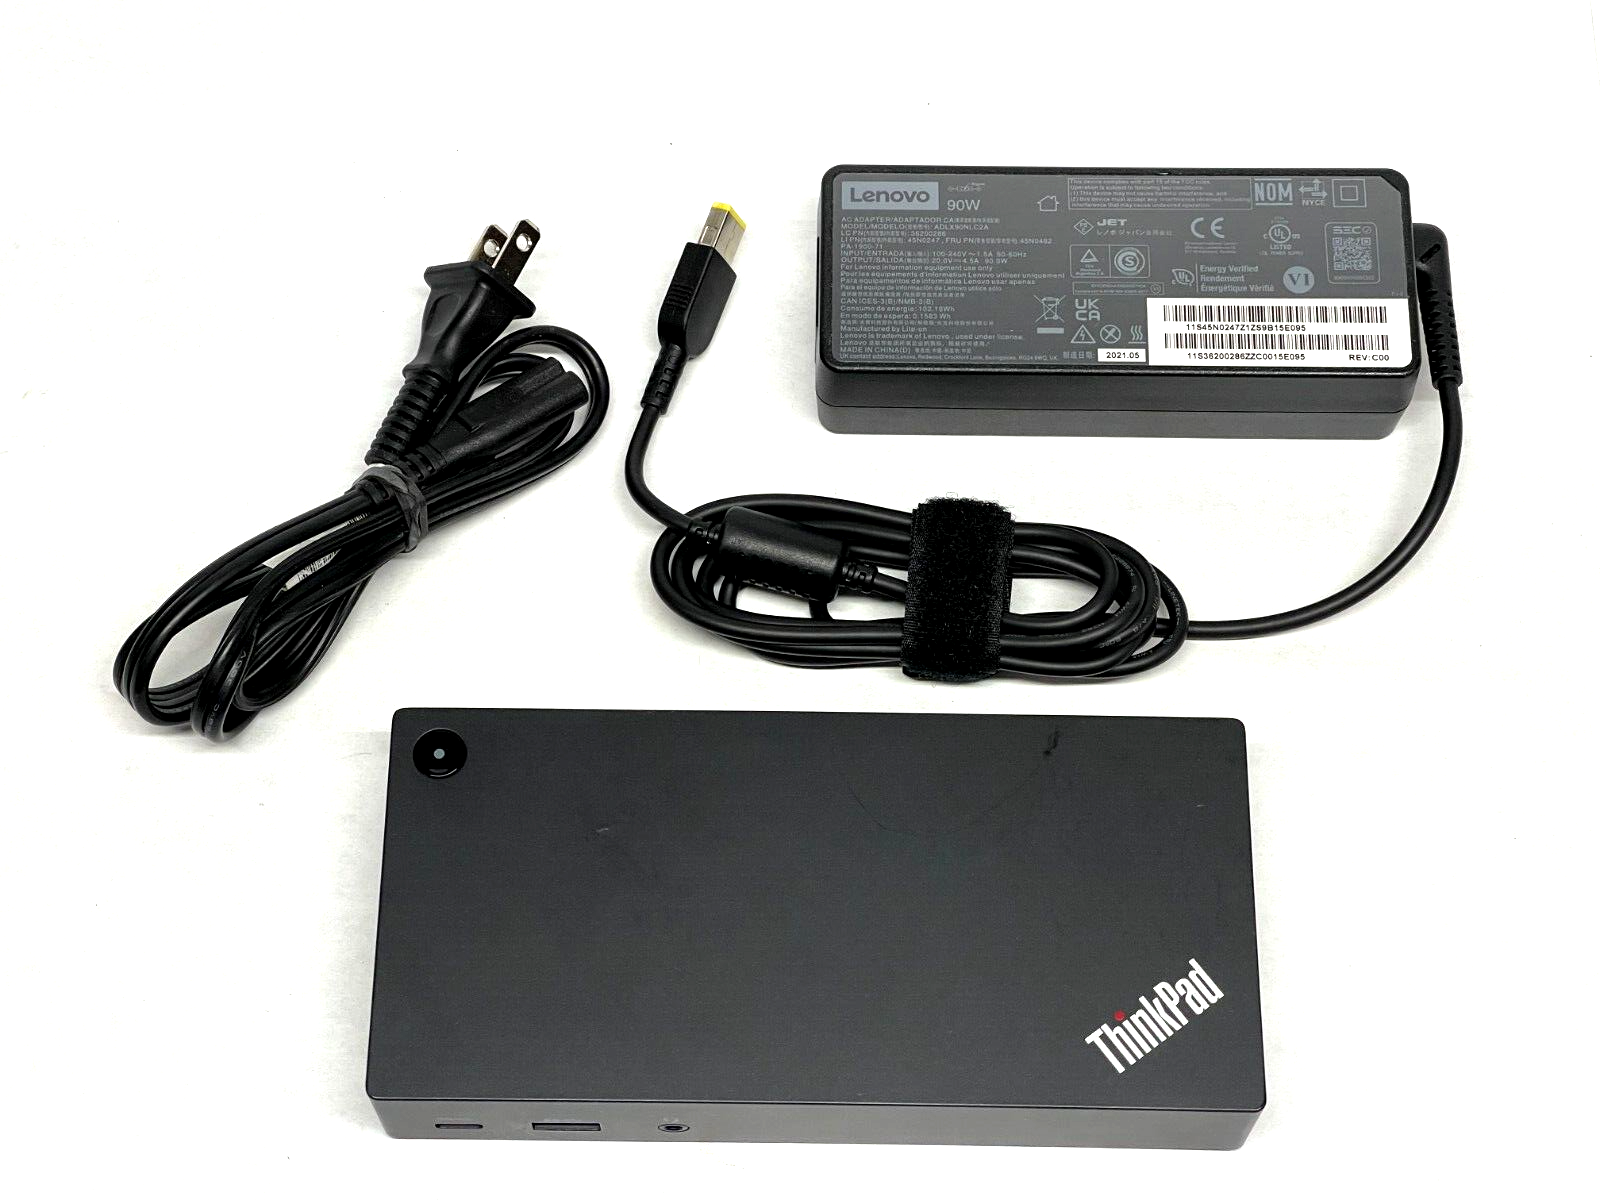 besøg Udvalg Venture Lenovo ThinkPad DK1633 40A9 USB-C Laptop and 50 similar items